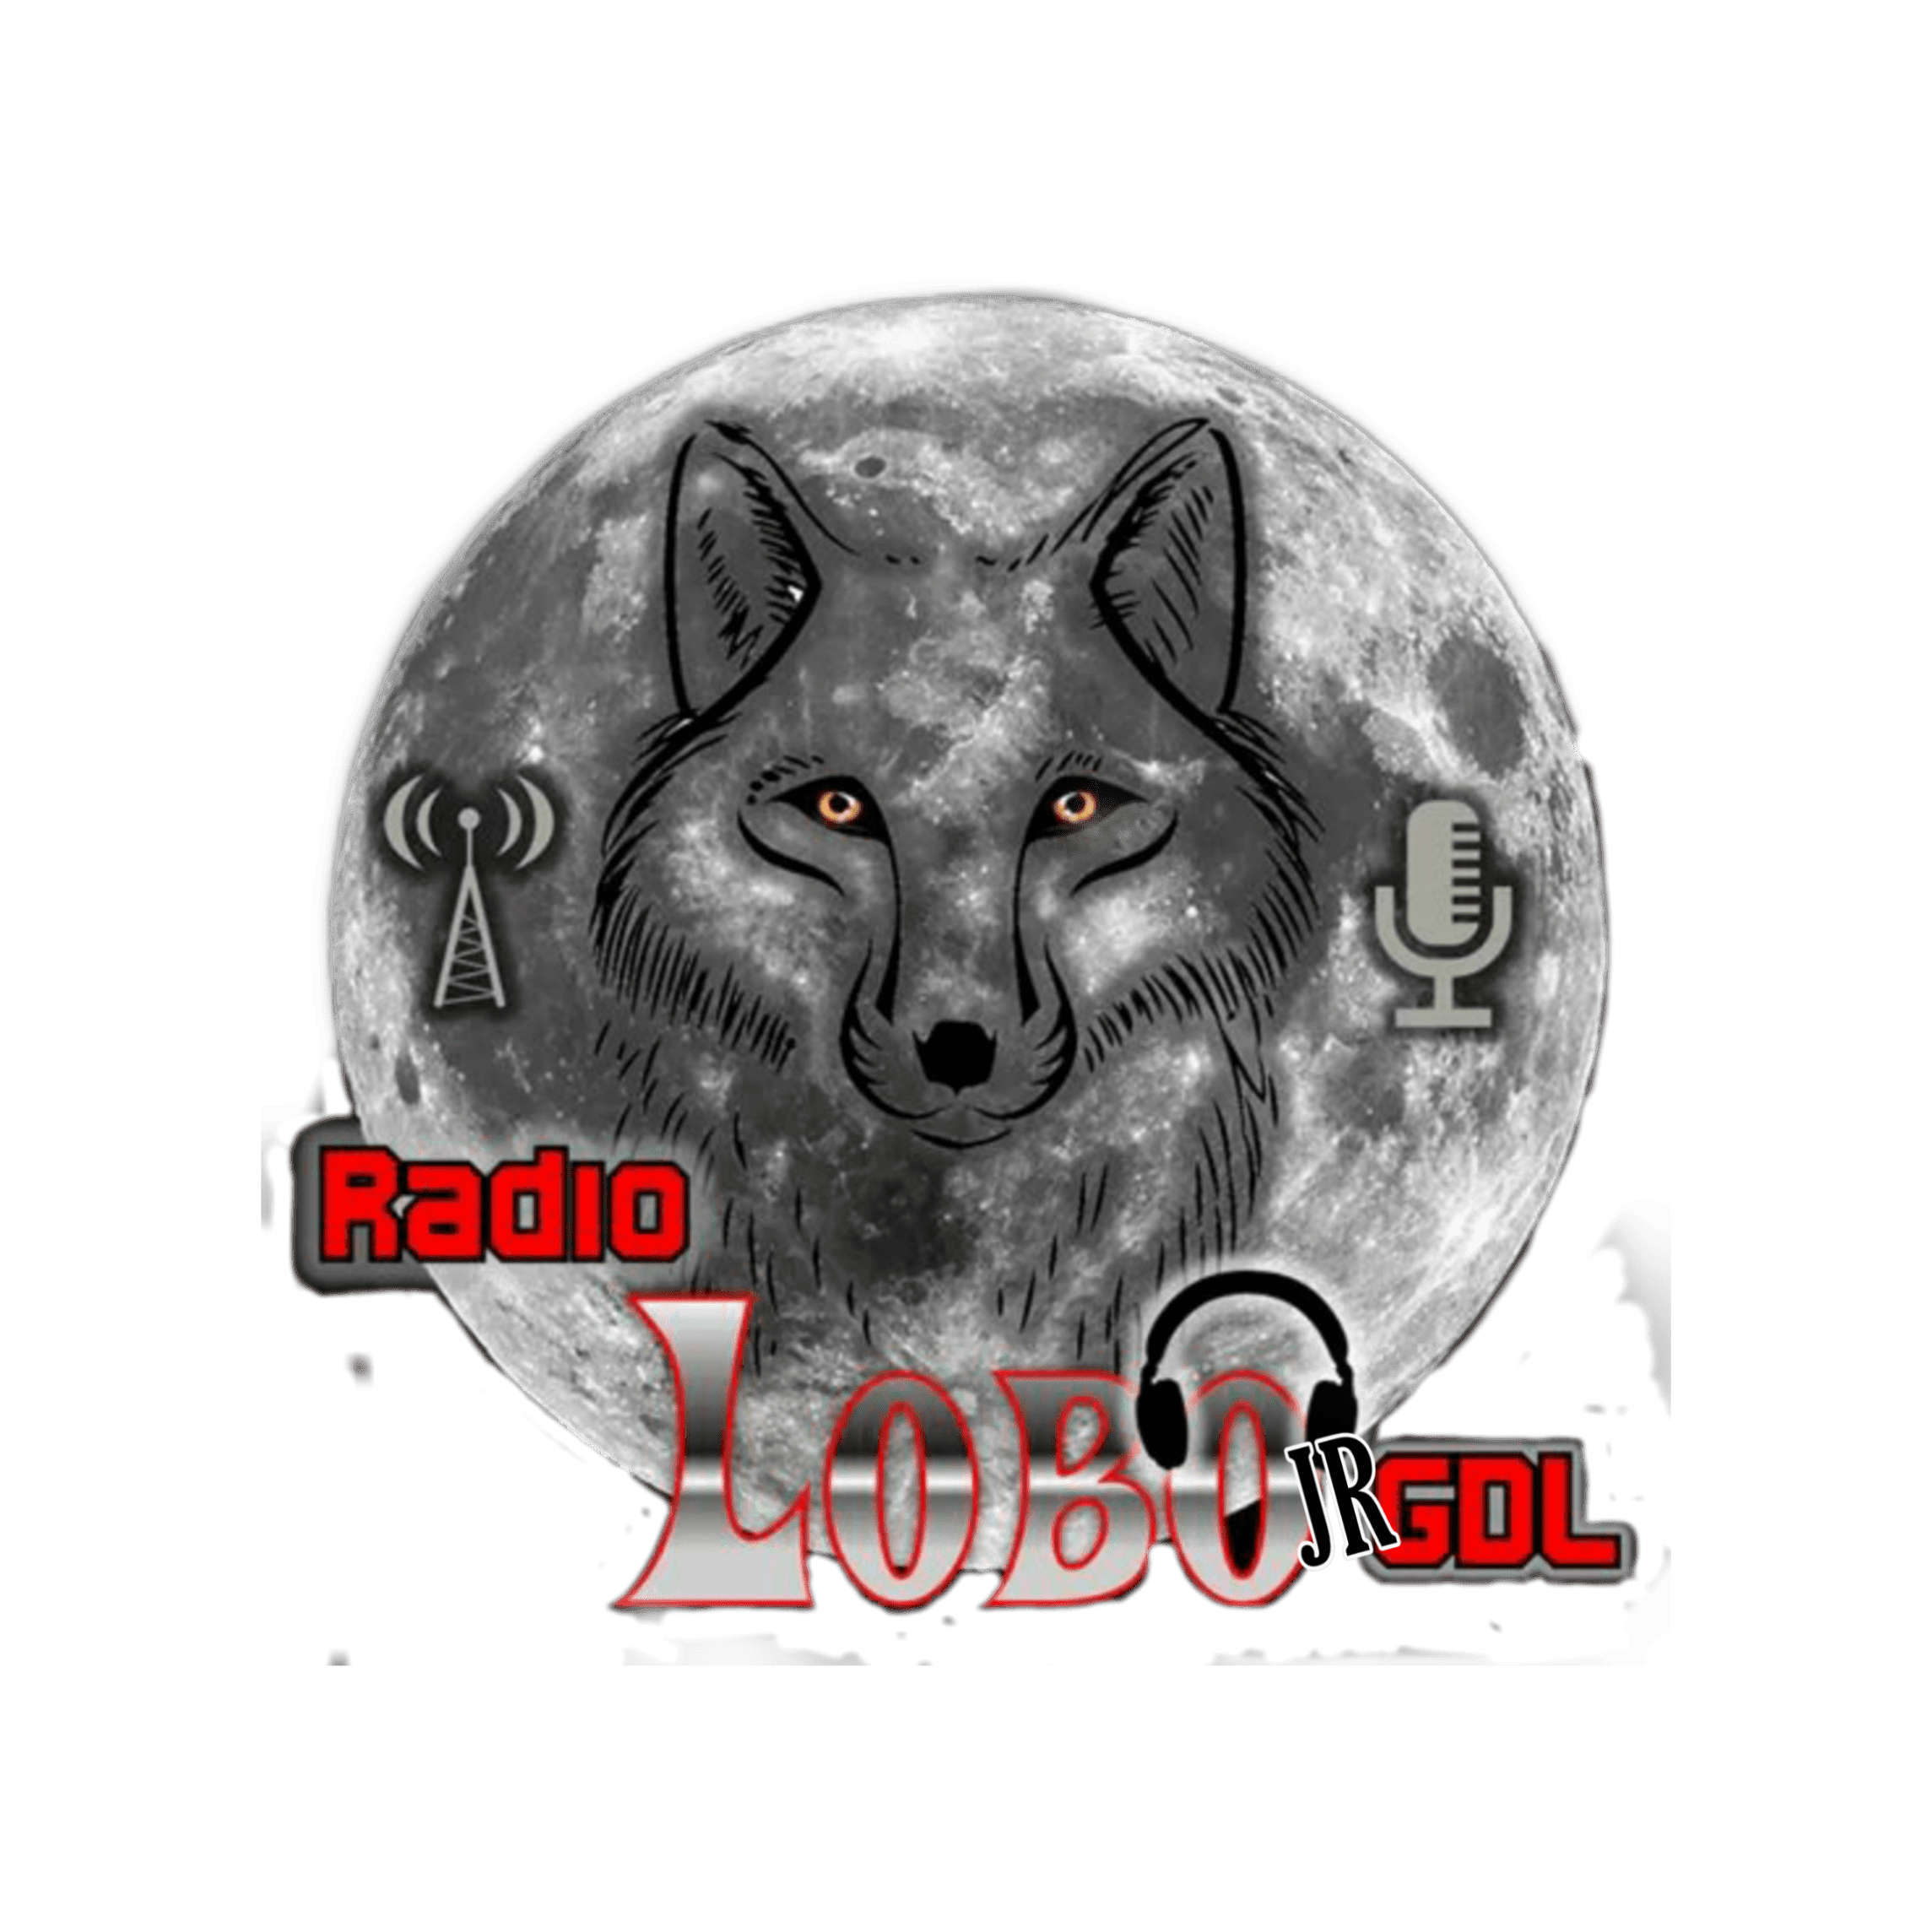 Radio Lobo Gdl